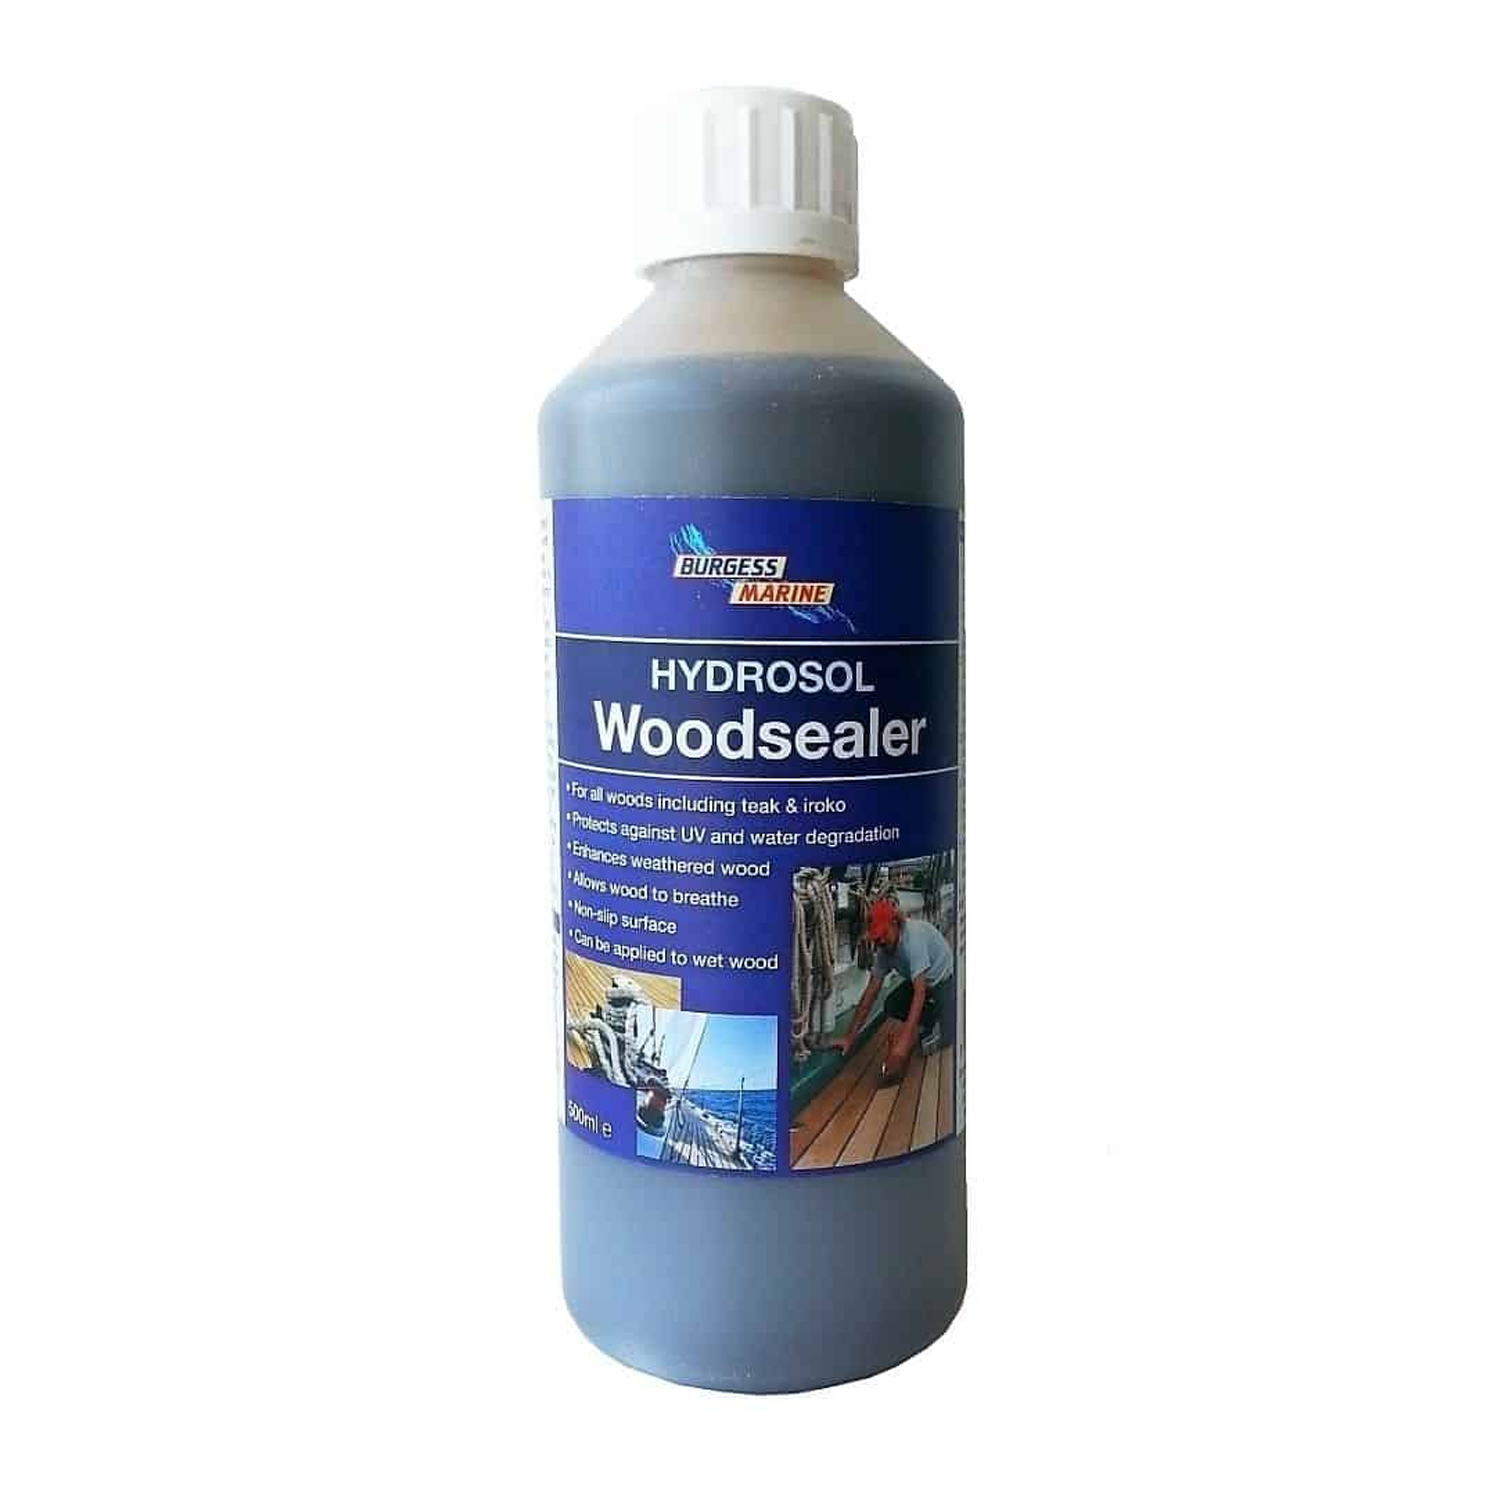 Hydrosol Woodsealer